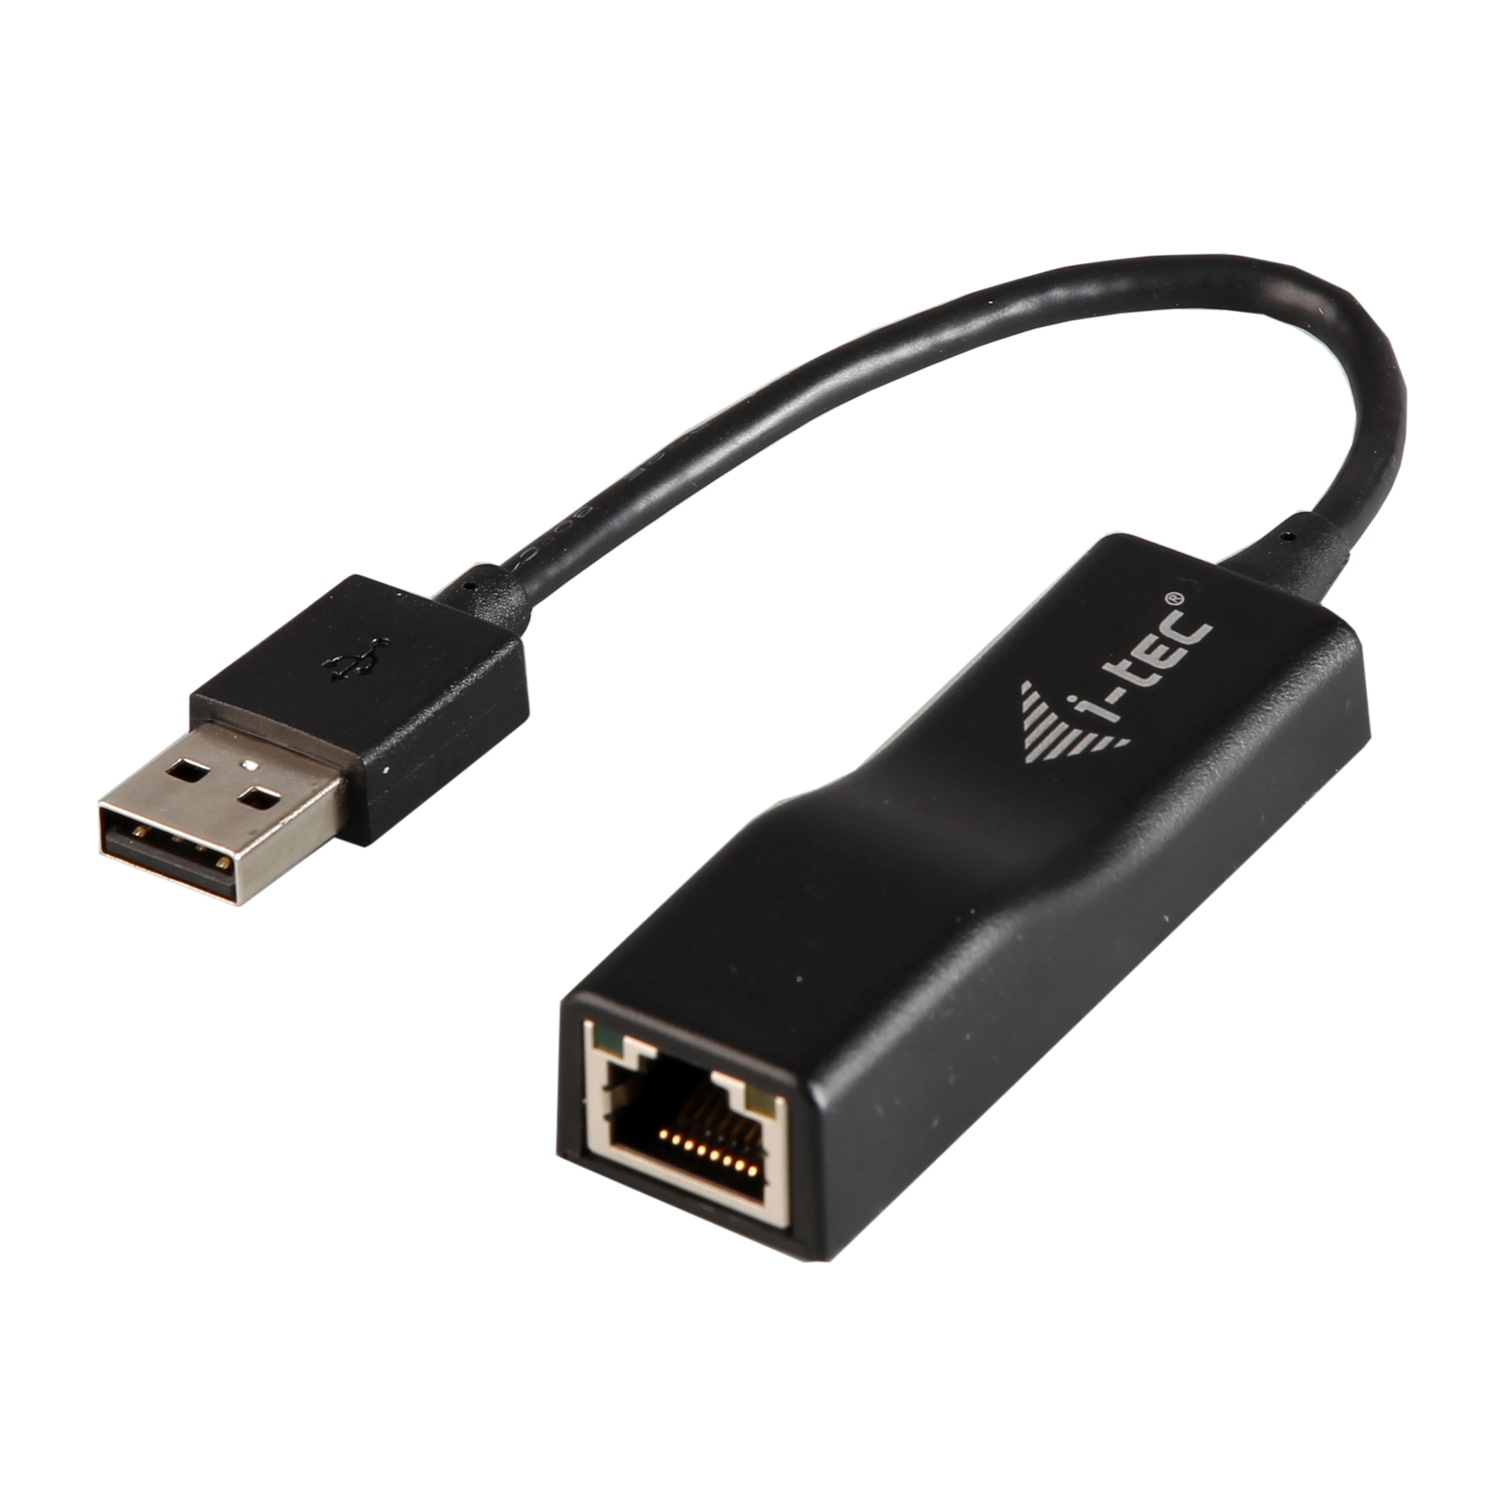  USB 2.0 Advance 10/100 Fast Ethernet LAN Network Adapter USB 2.0 to RJ45 LED for Tablets Ultrabooks Notebooks